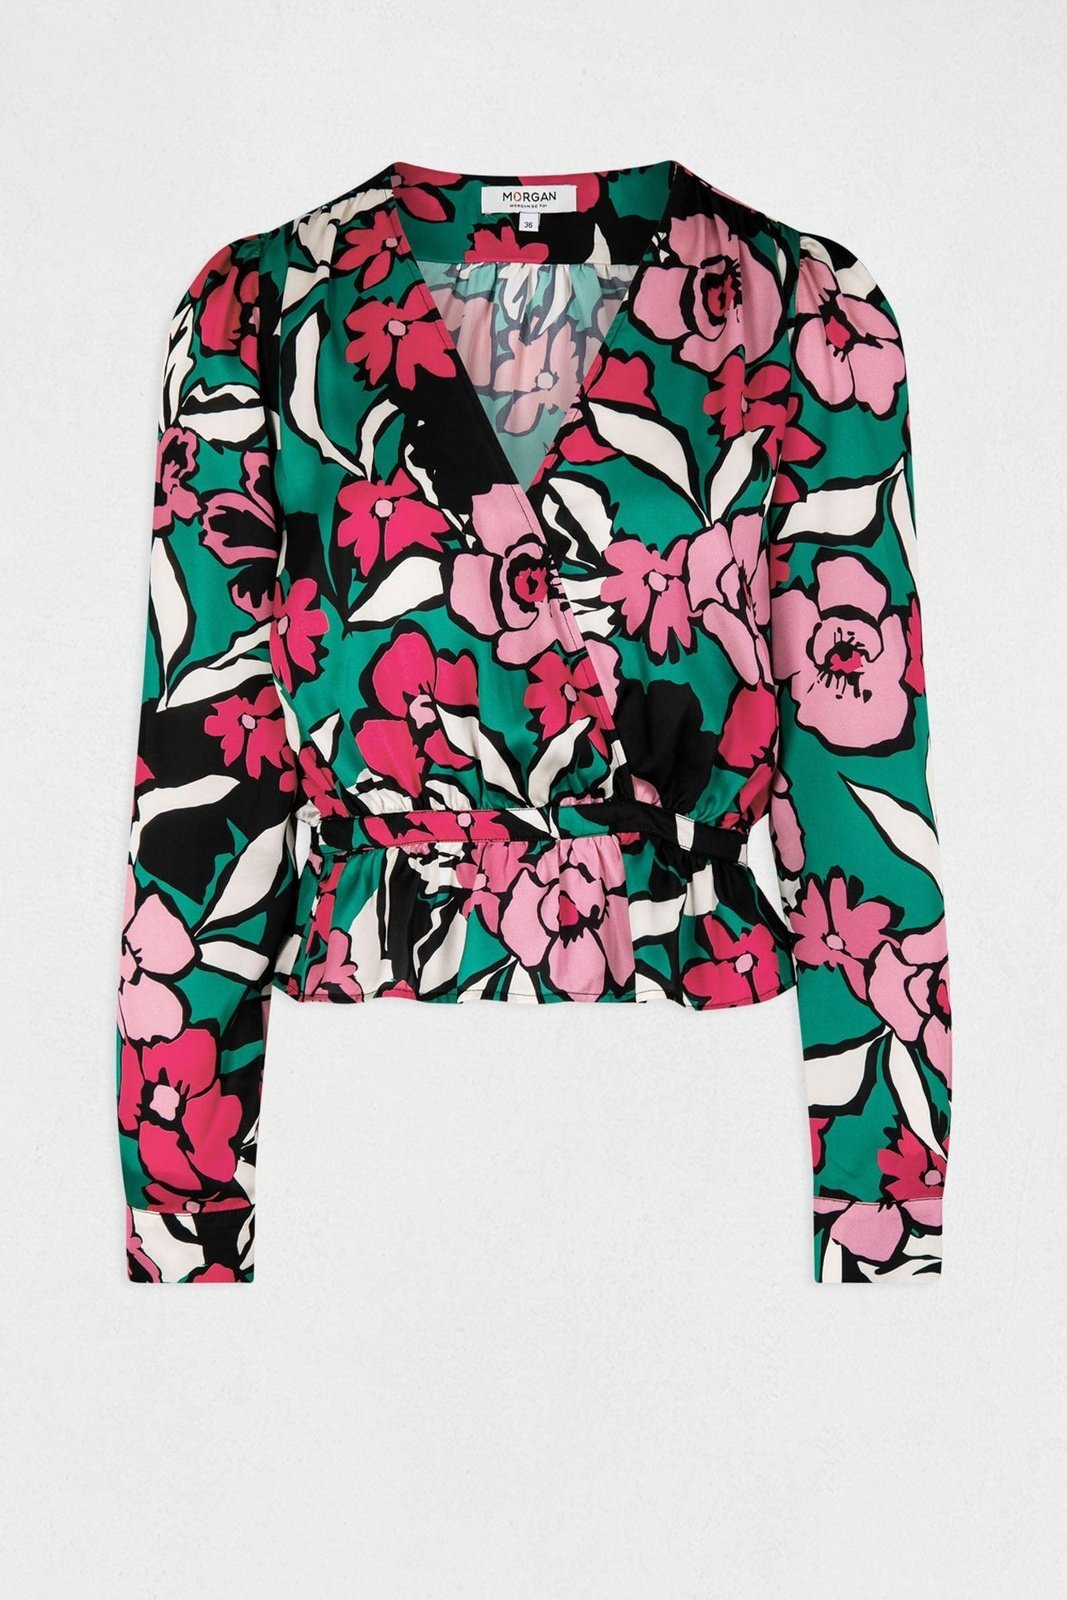 MORGAN - חולצה פרחונית לנשים בצבע טורקיז - MASHBIR//365